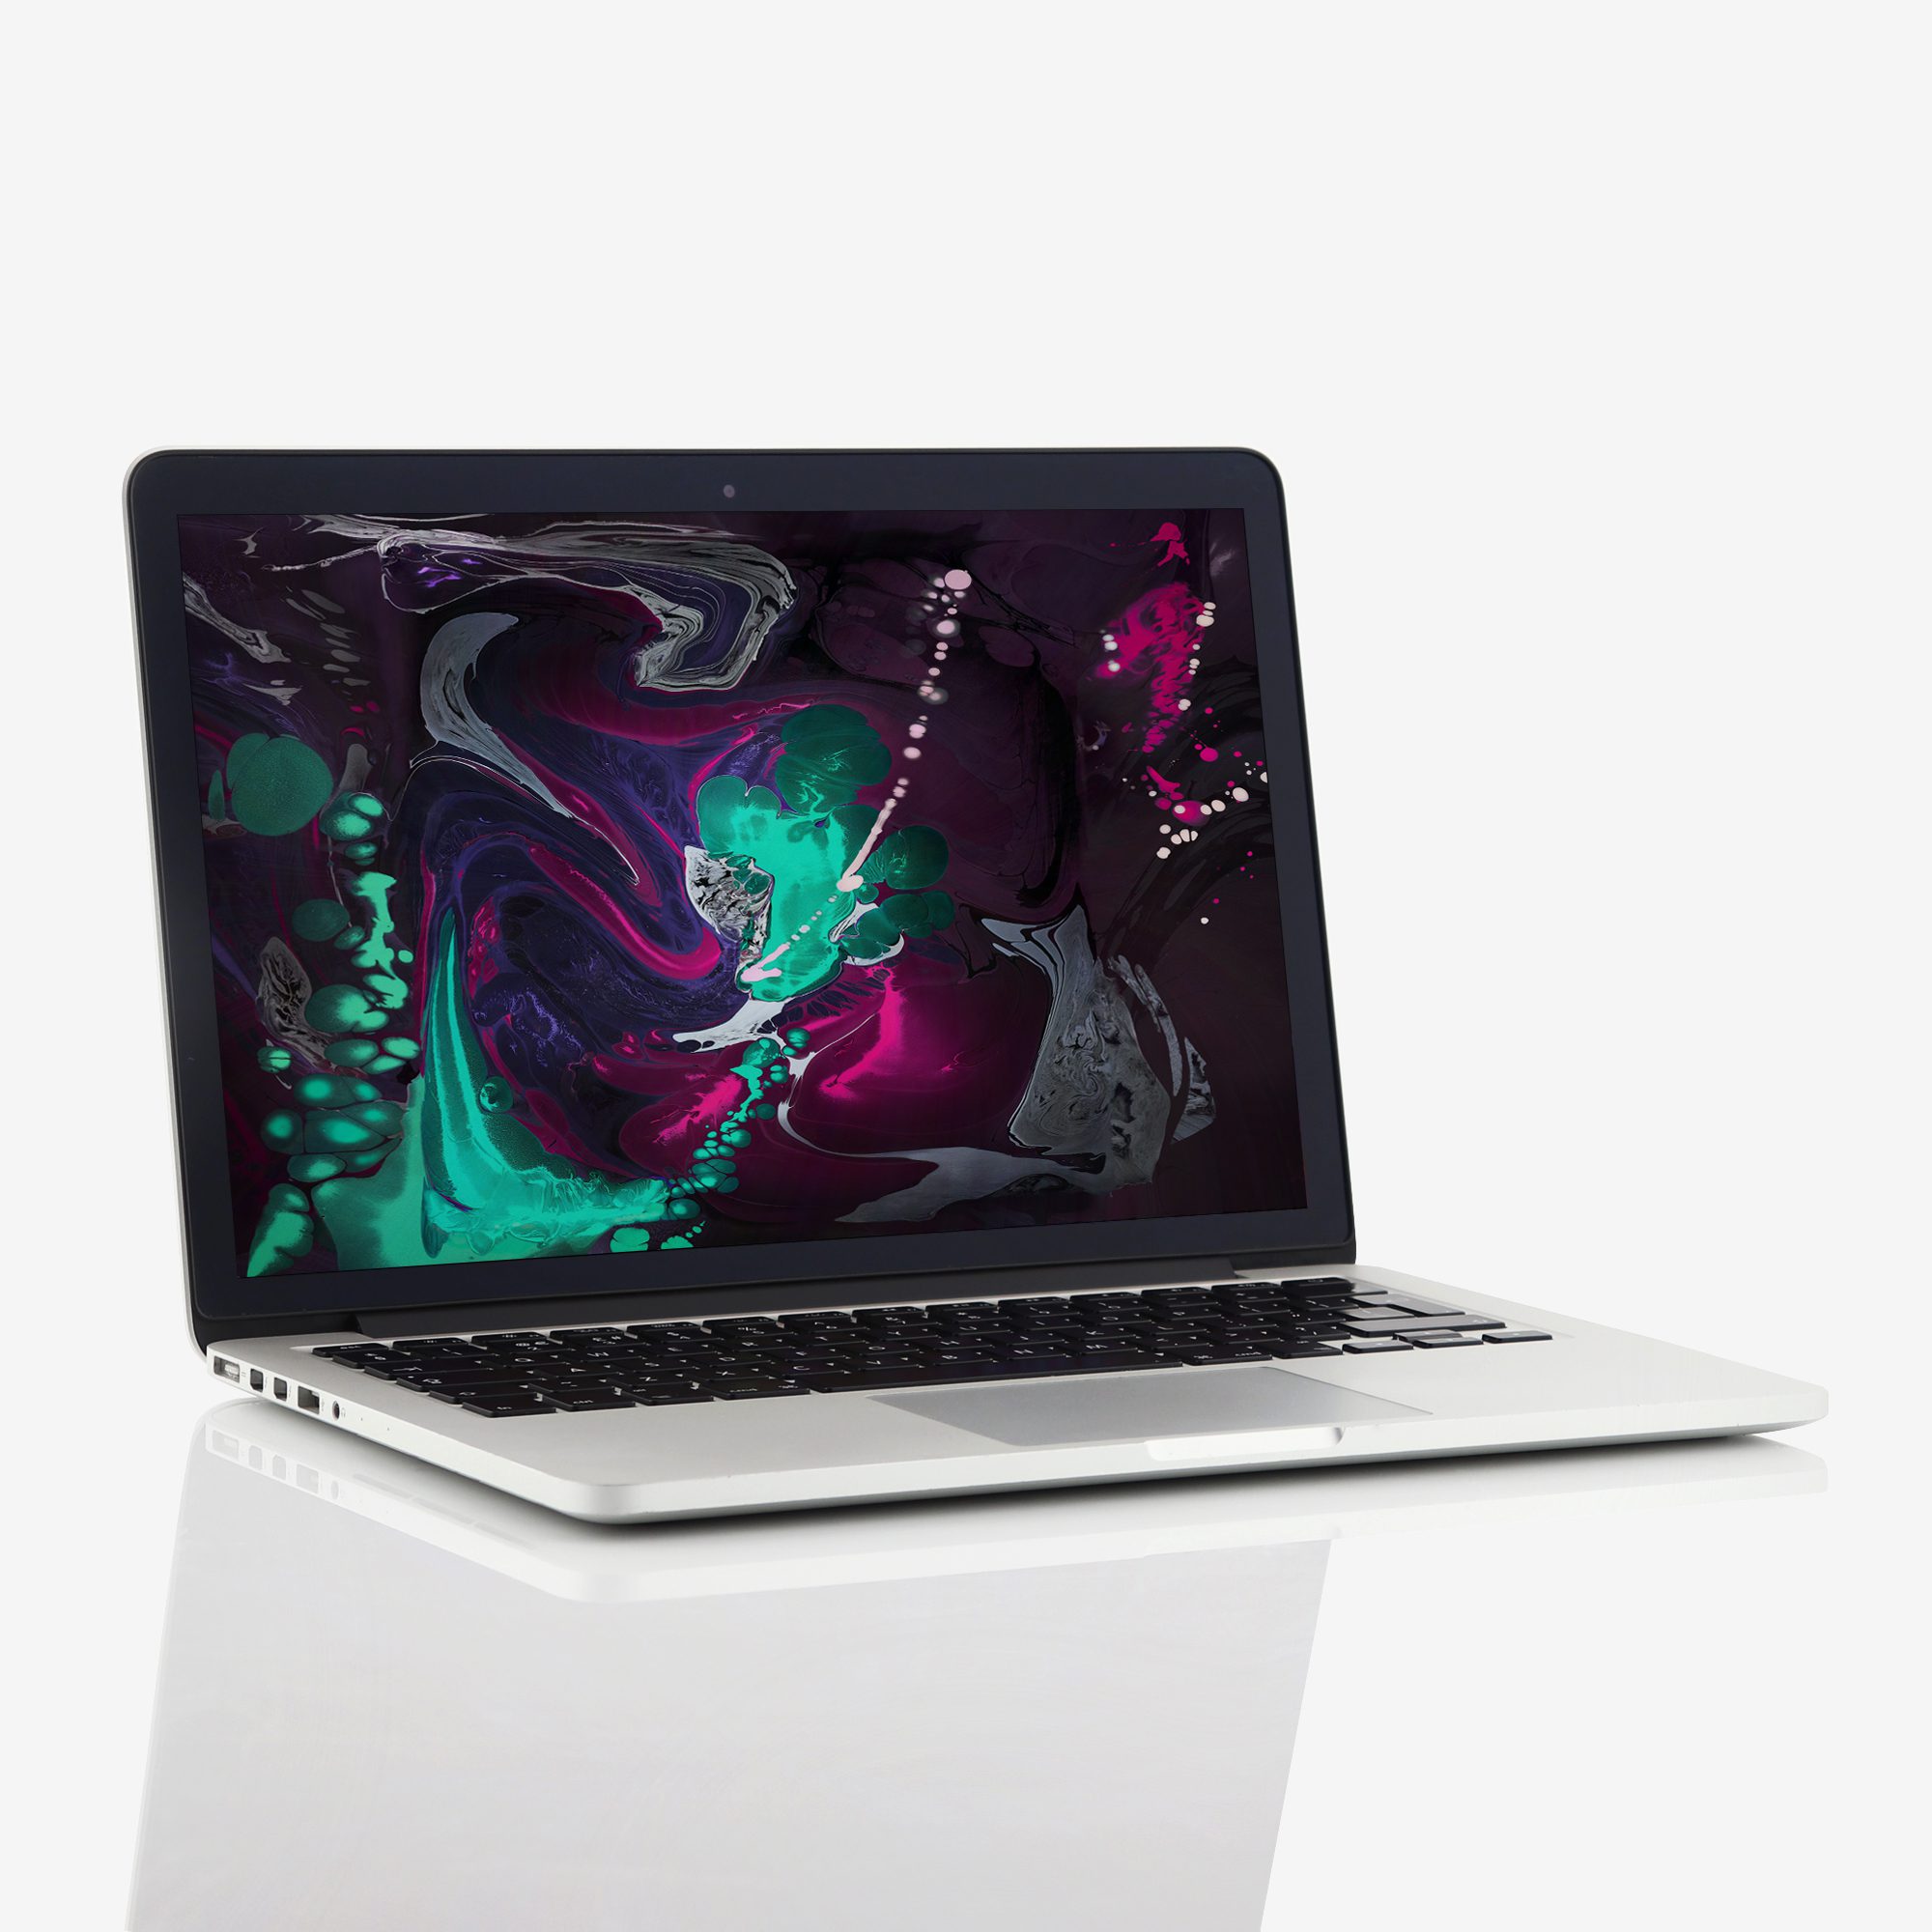 1 x Apple MacBook Pro Retina 13 Inch Intel Core i5 2.90 GHz (2015)